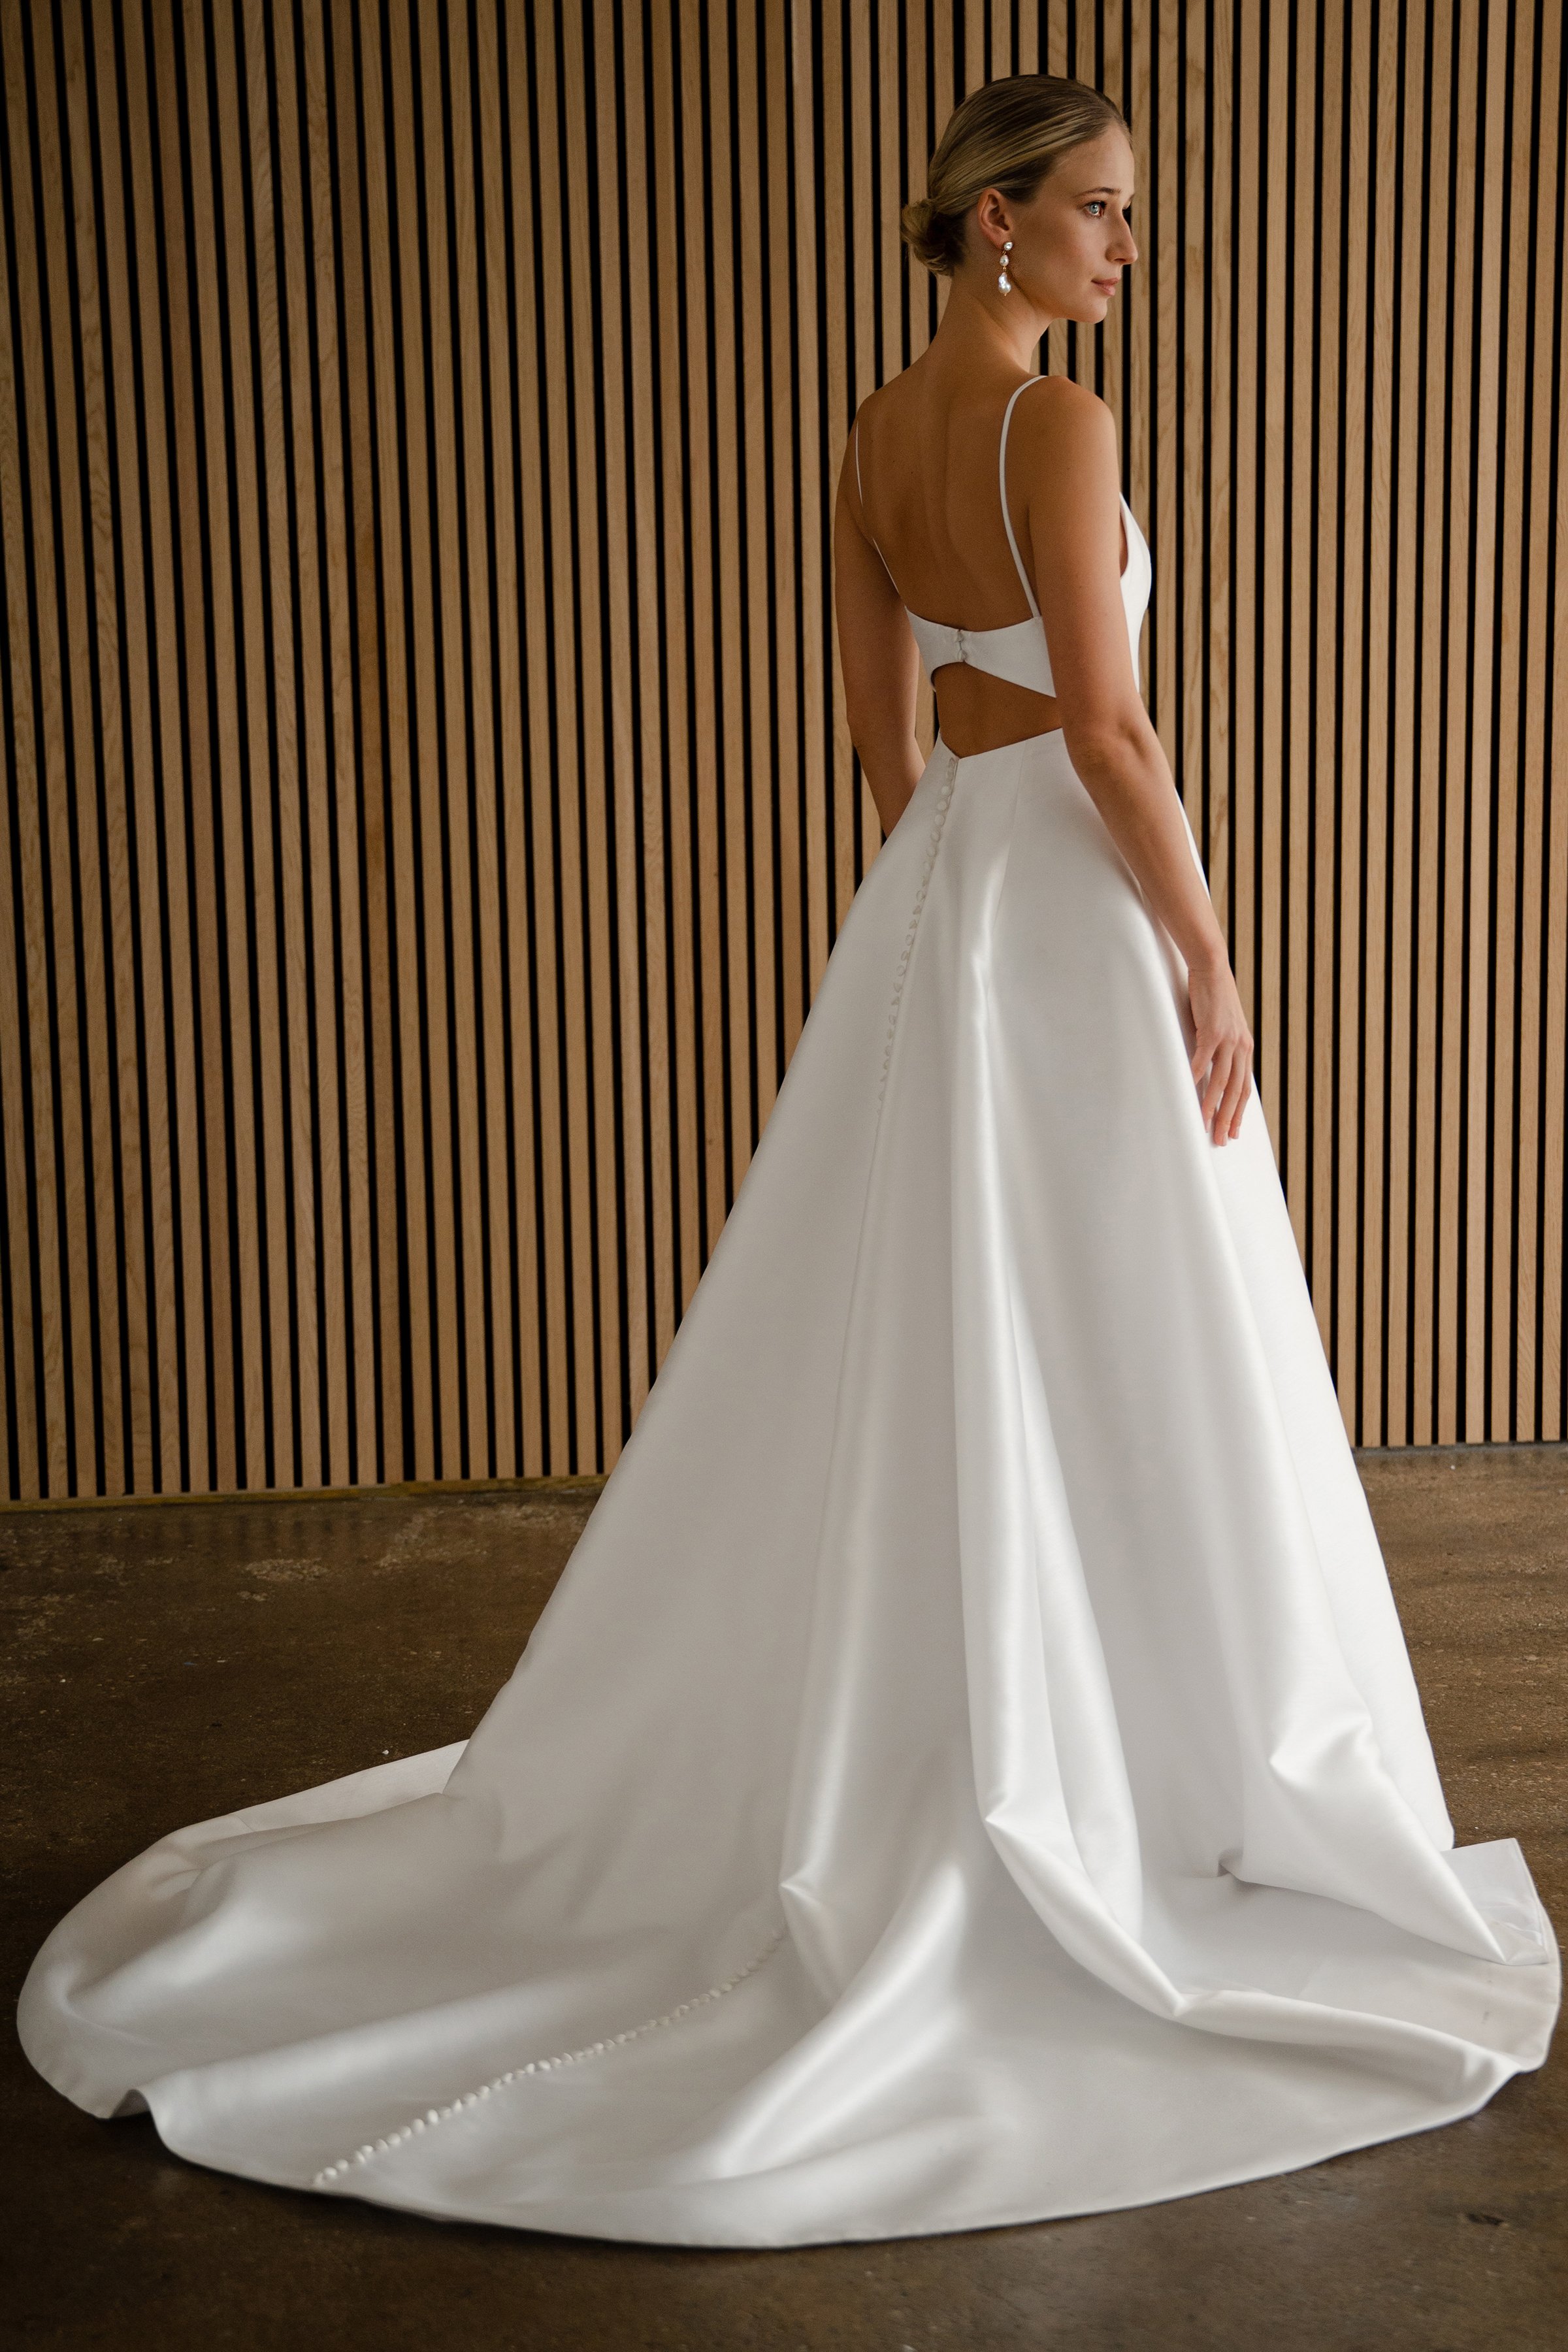 blanc-de-blanc-bridal-boutique-pittsburgh-cleveland-dress-wedding-gown-jenny-yoo-tamson-back.jpg